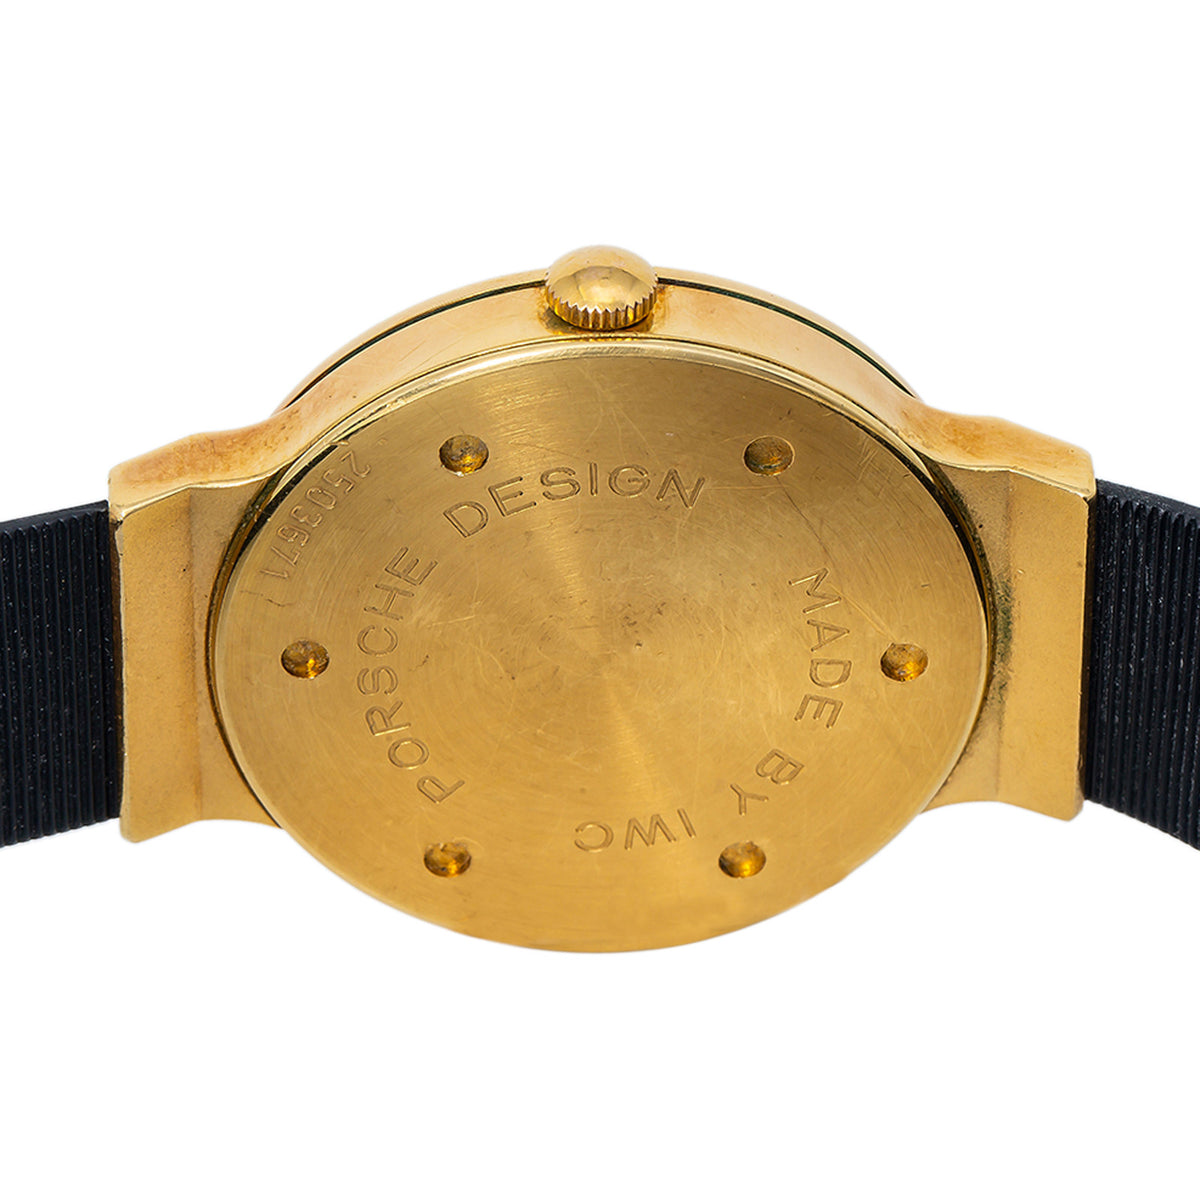 IWC Porsche Design IW332018k Yellow Gold Black Dial  Quartz Unisex Watch 32mm